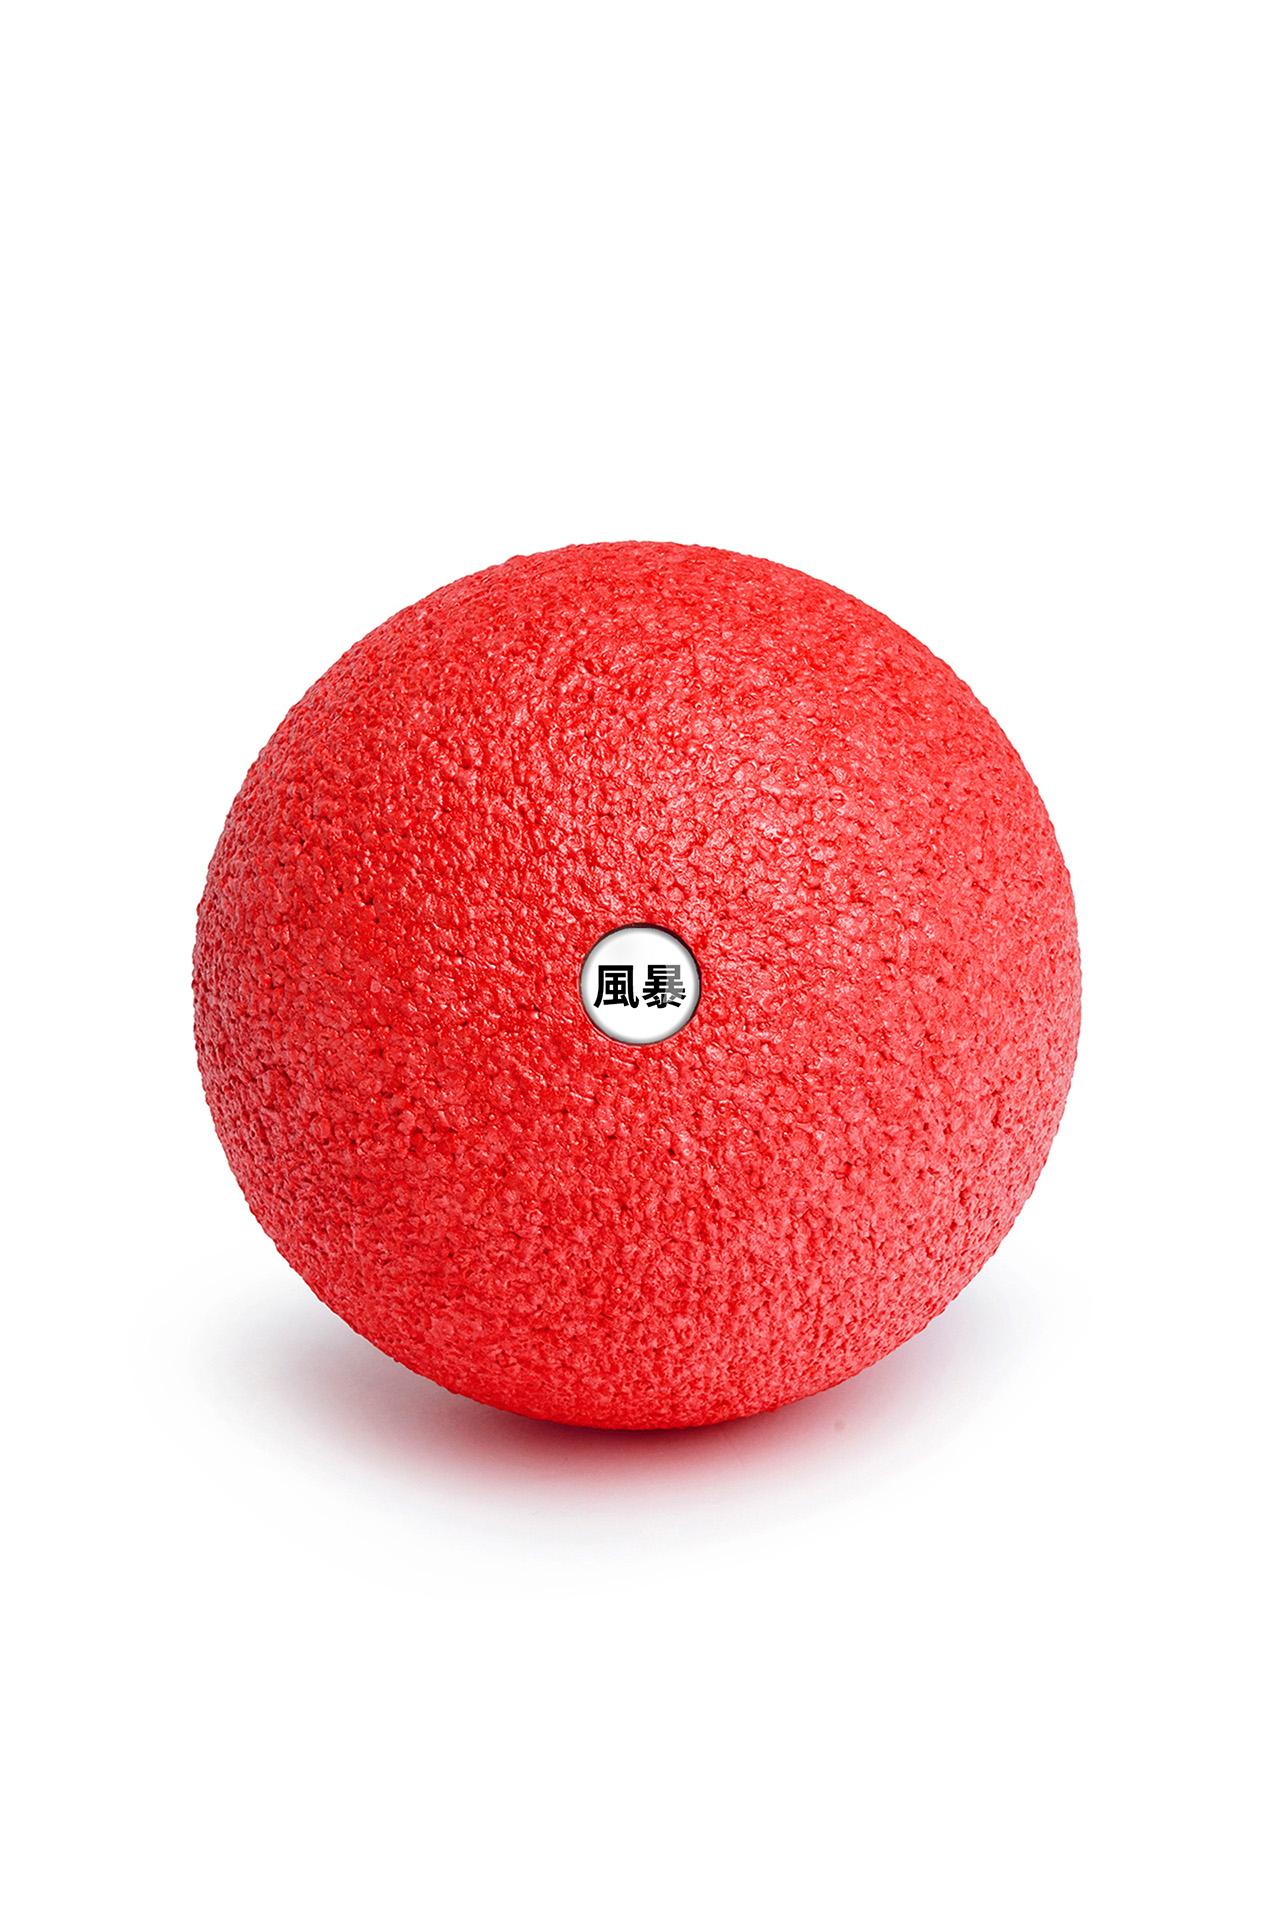 blackroll ball 12cm fengbao kung fu shop wien 1080 ball chinesisch red rot